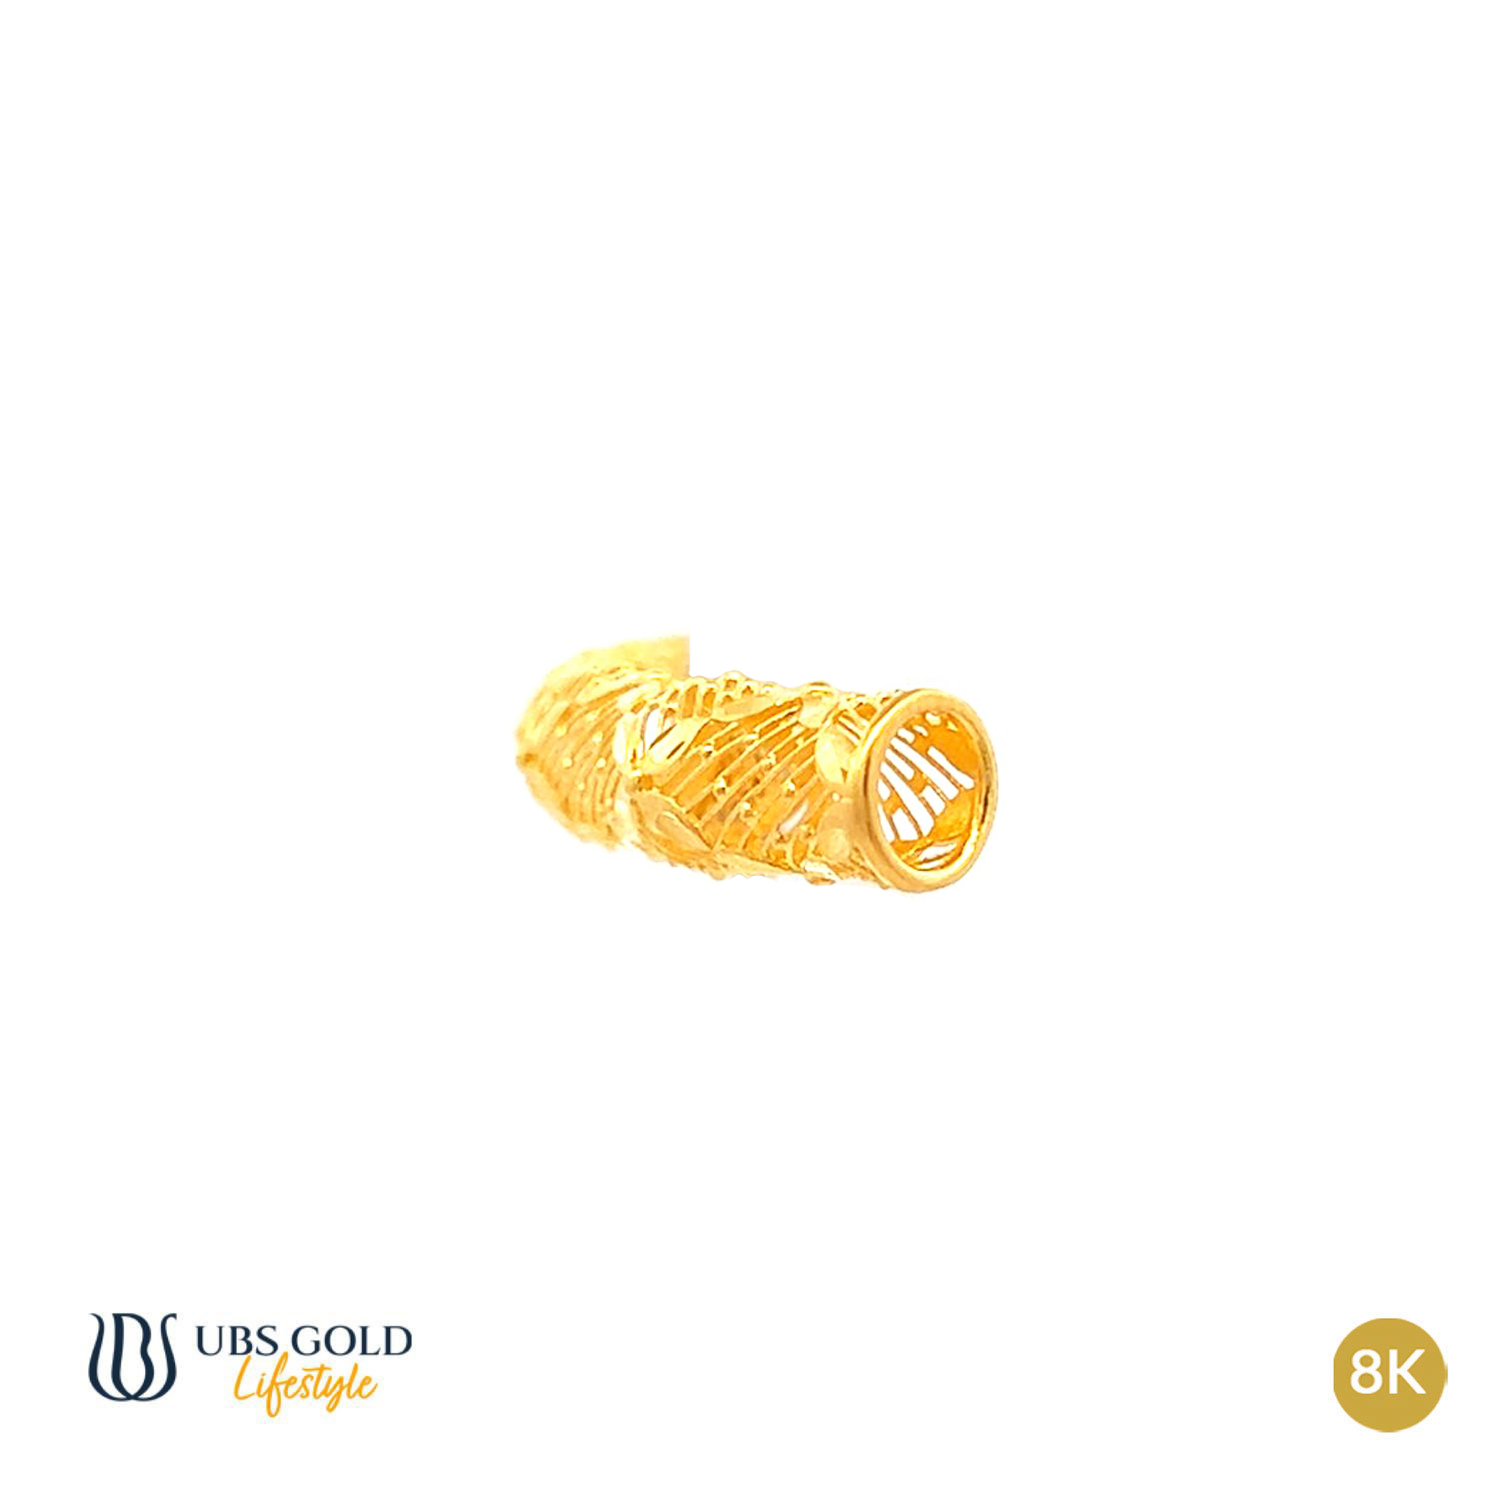 UBS Gold Liontin Emas Sakura - Cdm0084 - 8K